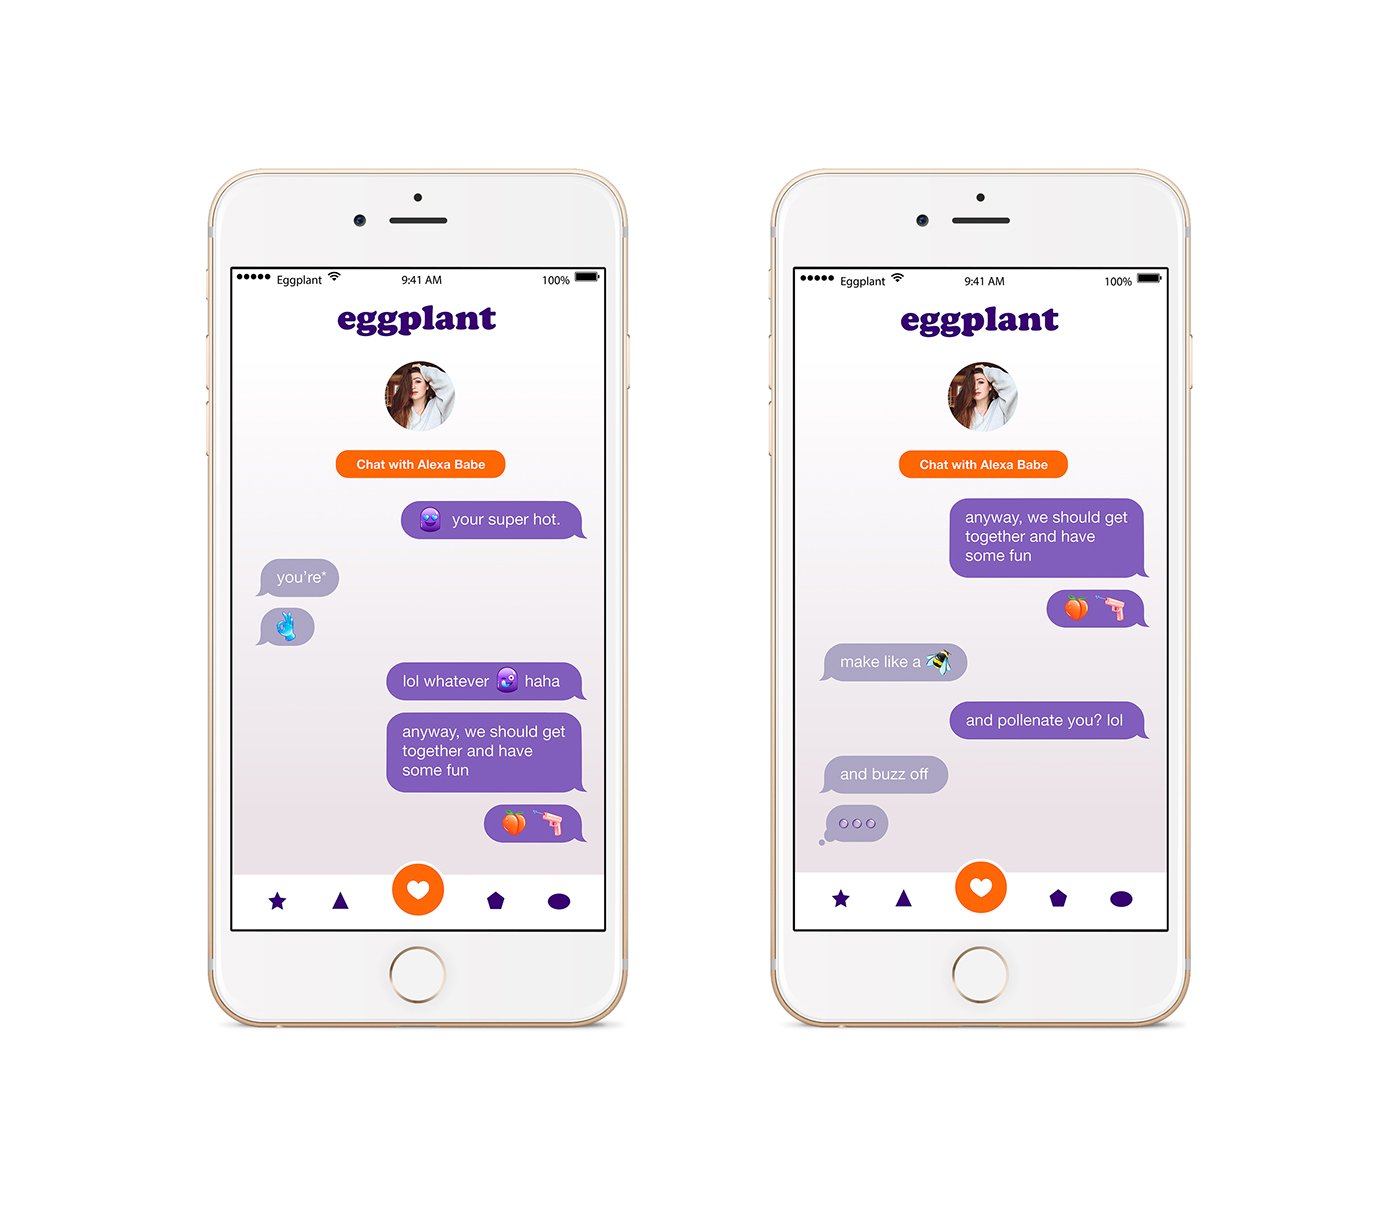 Emoji apple peach Dating app texting messaging face